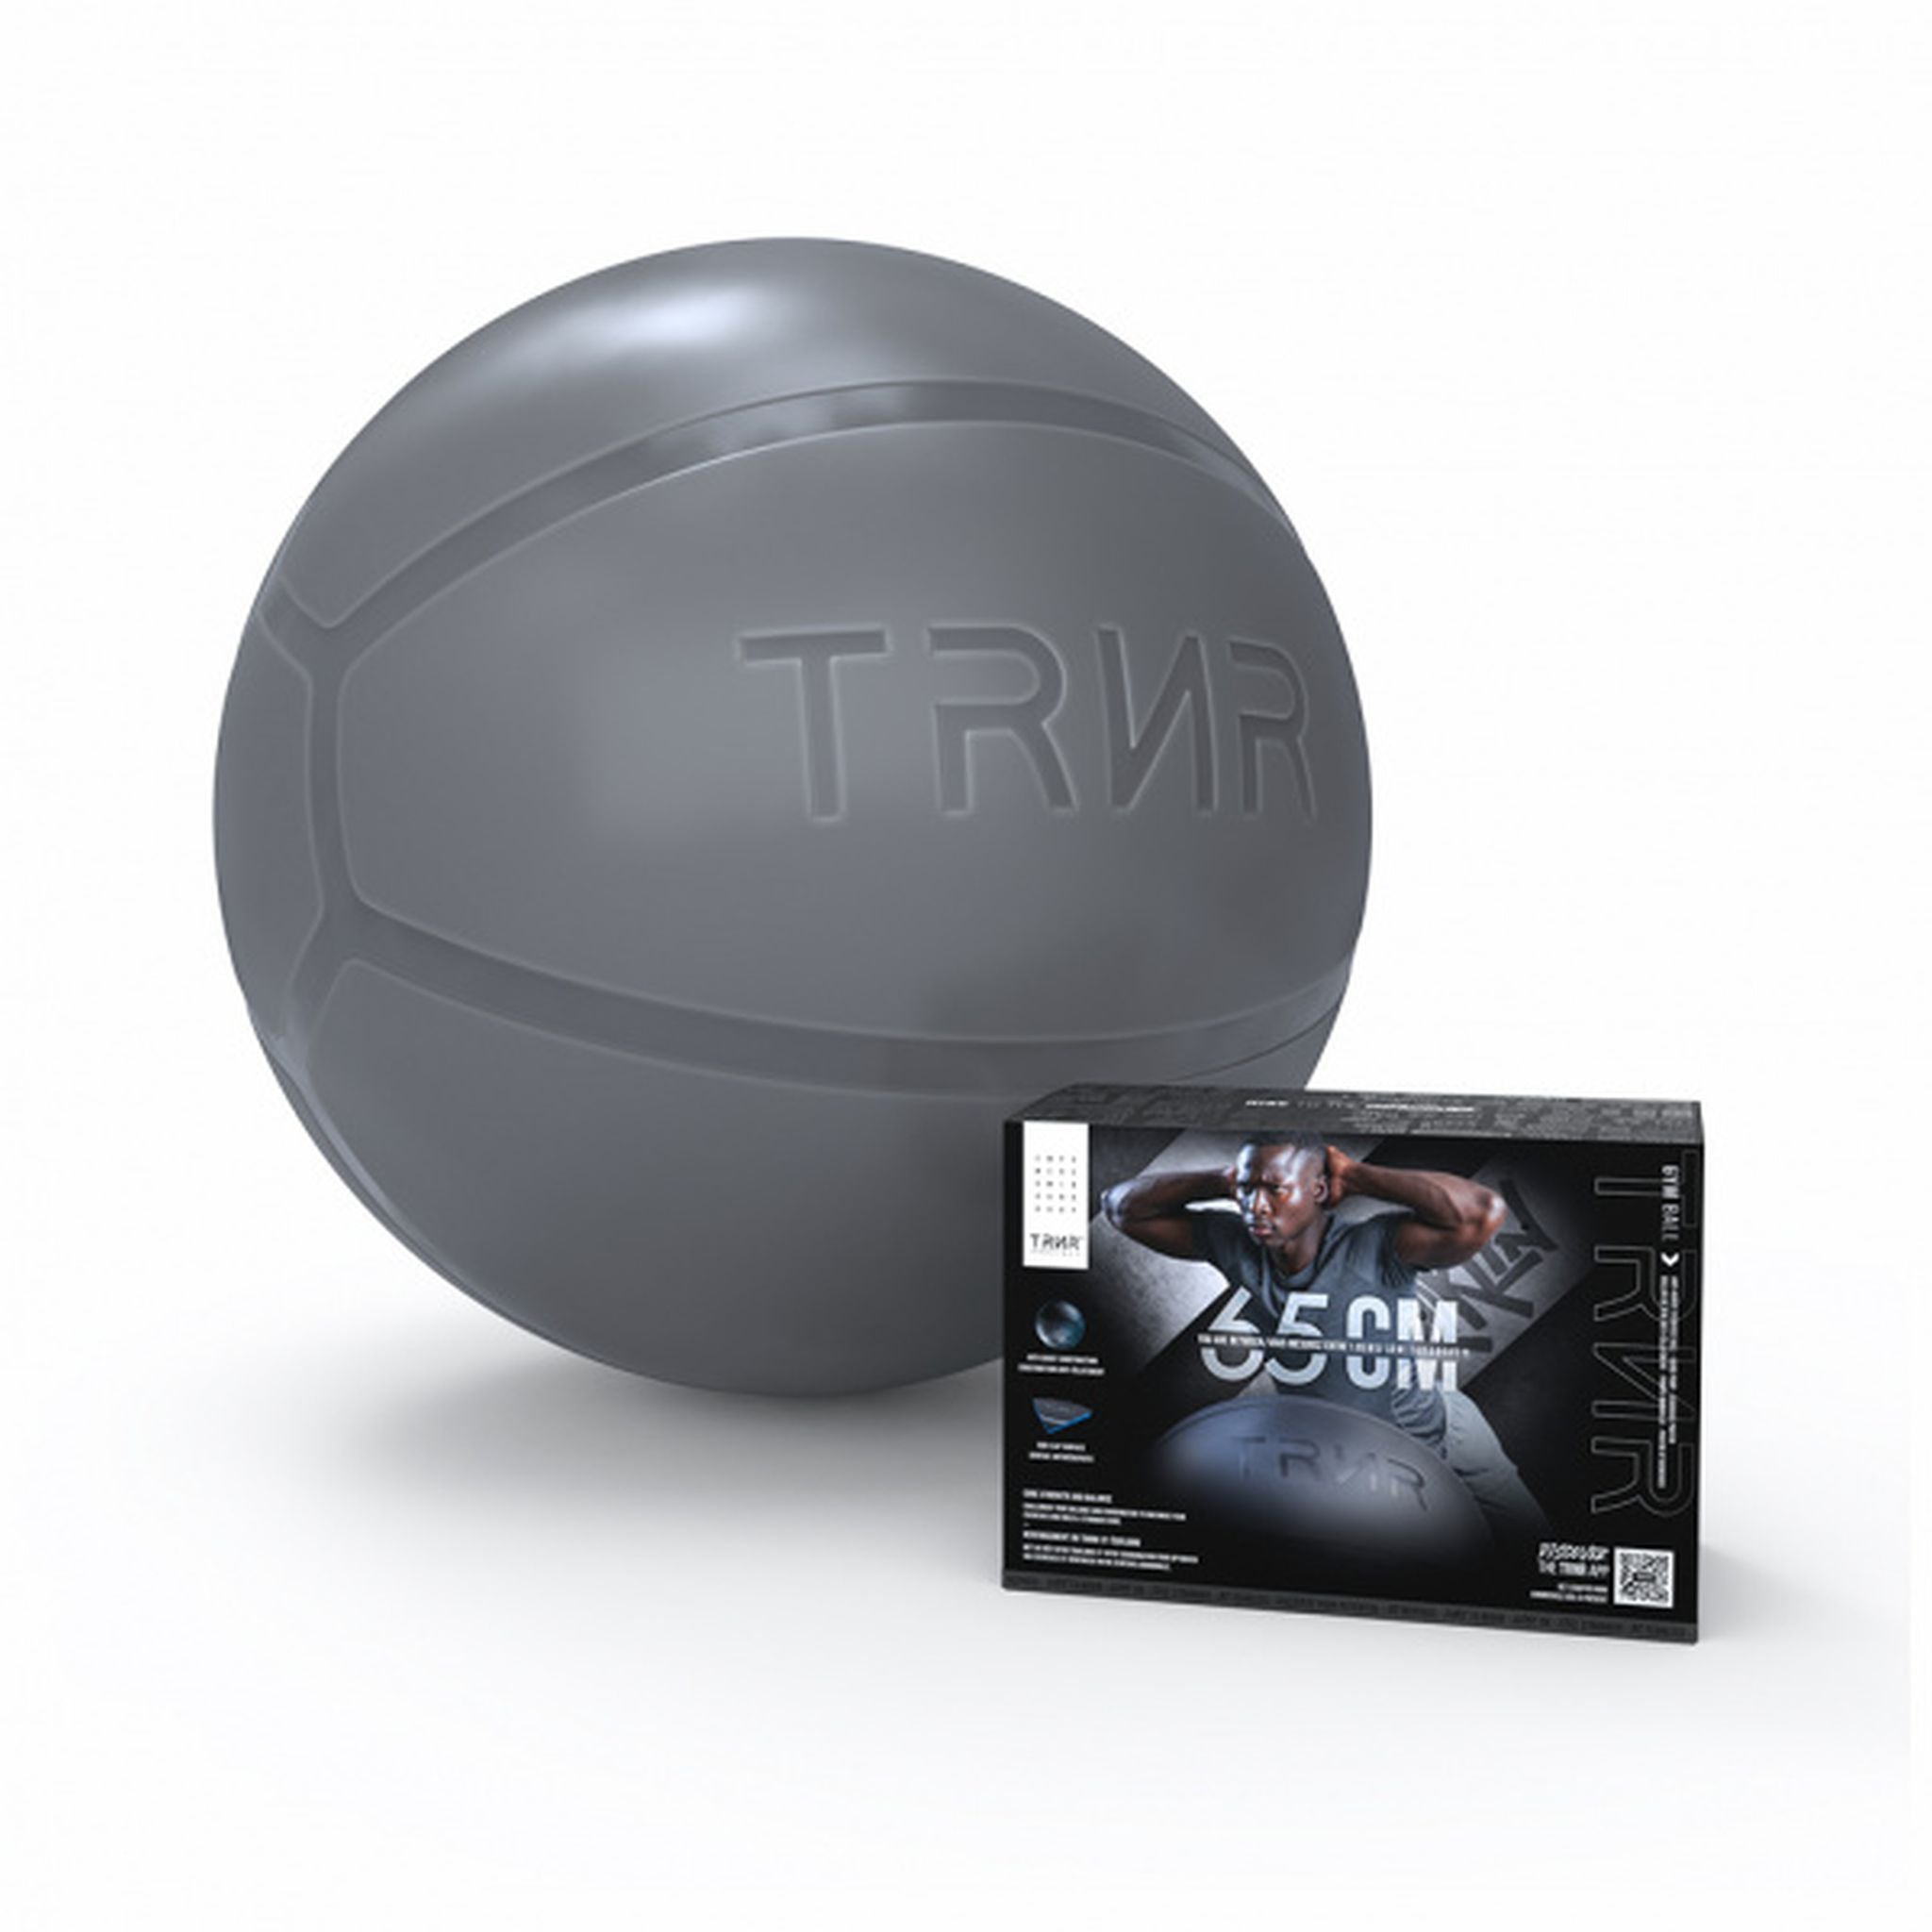 TRNR Gym Ball - 65CM